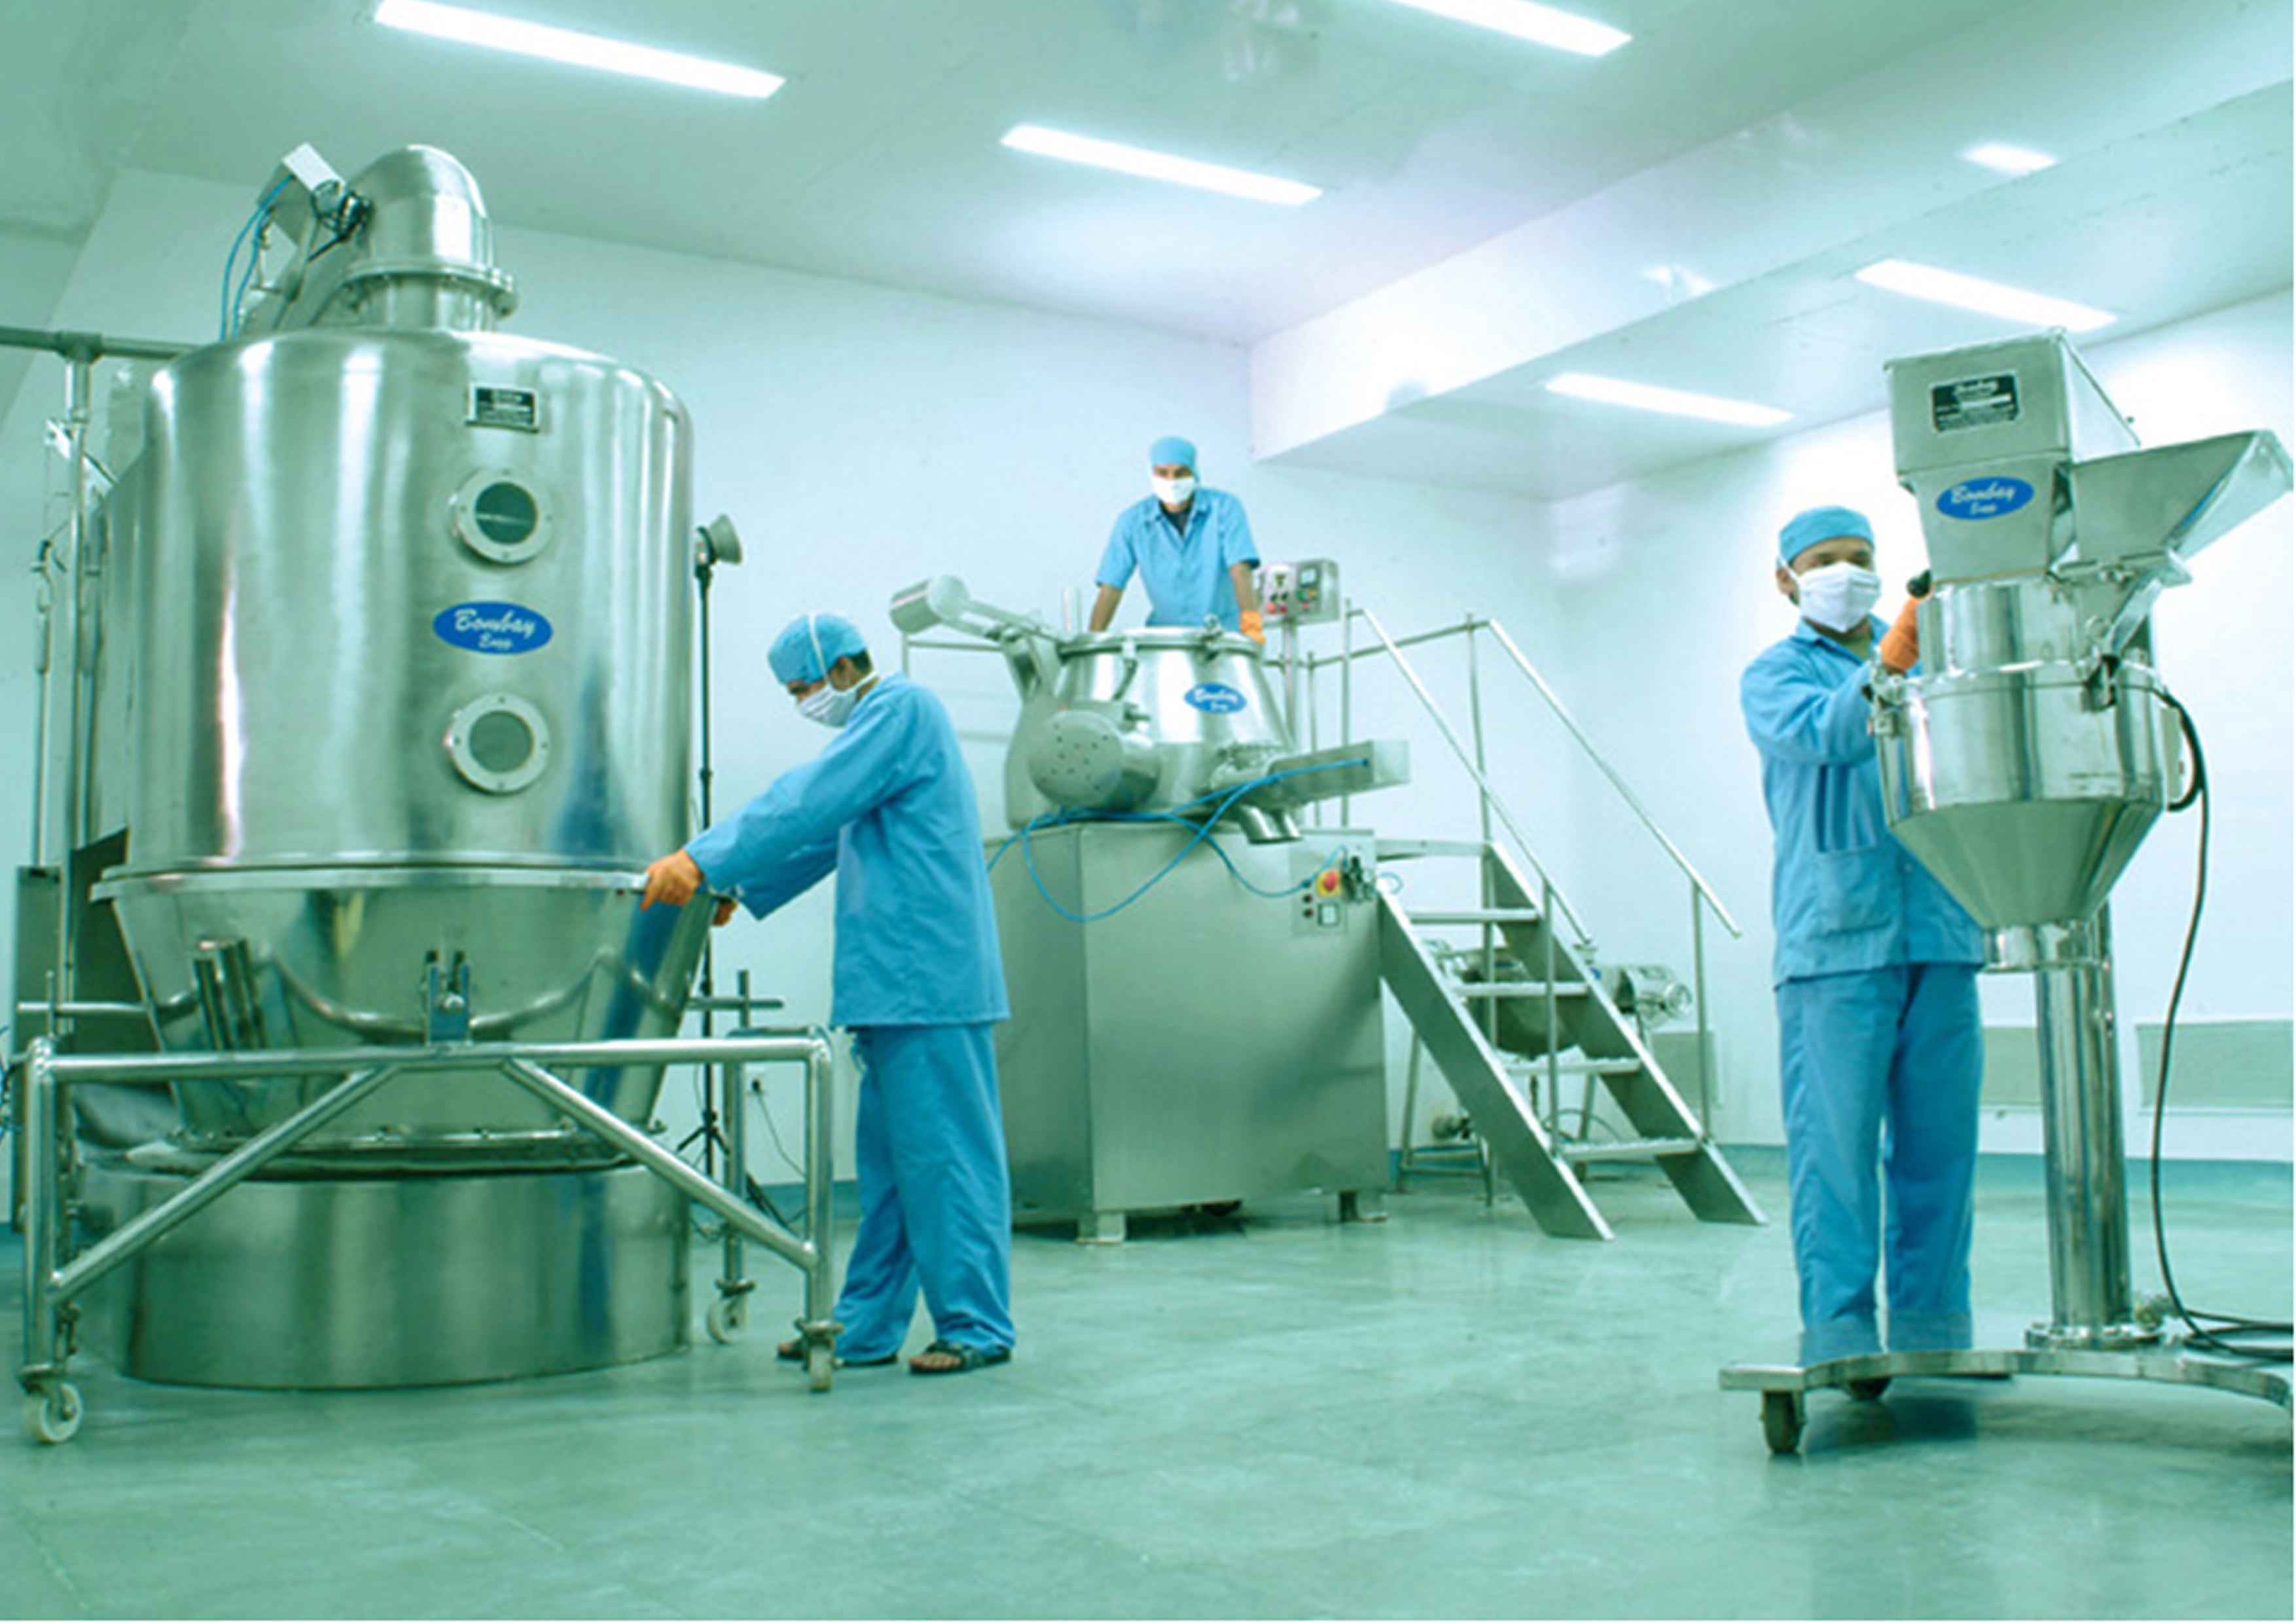 "A Glimpse Into an Advanced Pharmaceutical Production Facility"